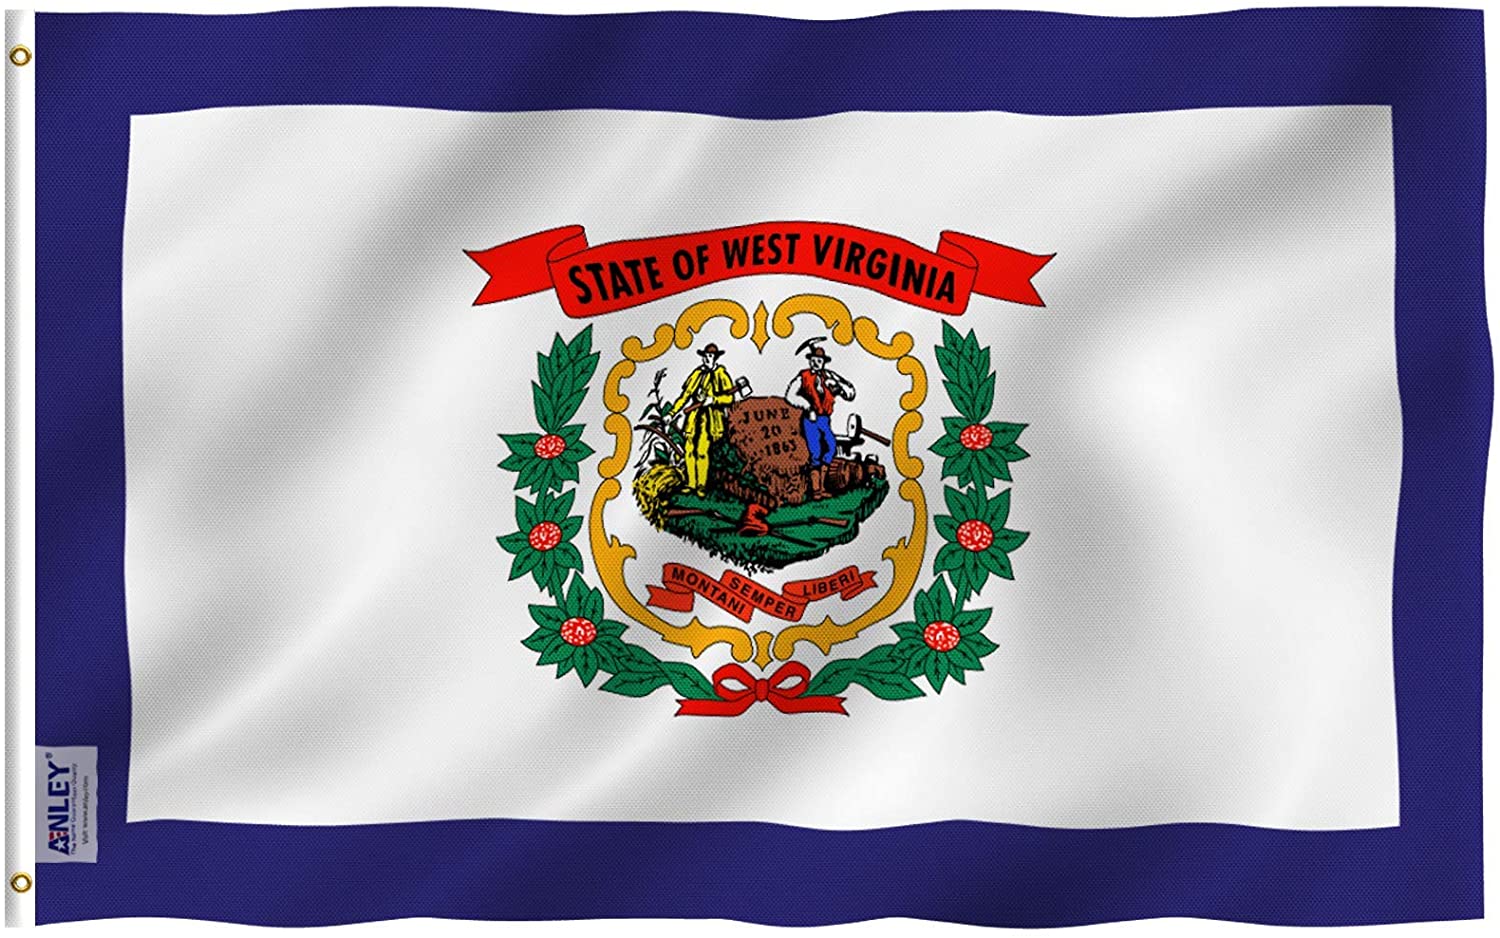 Mexico Flag 2-Pack 5-ft W x 3-ft H International Flag